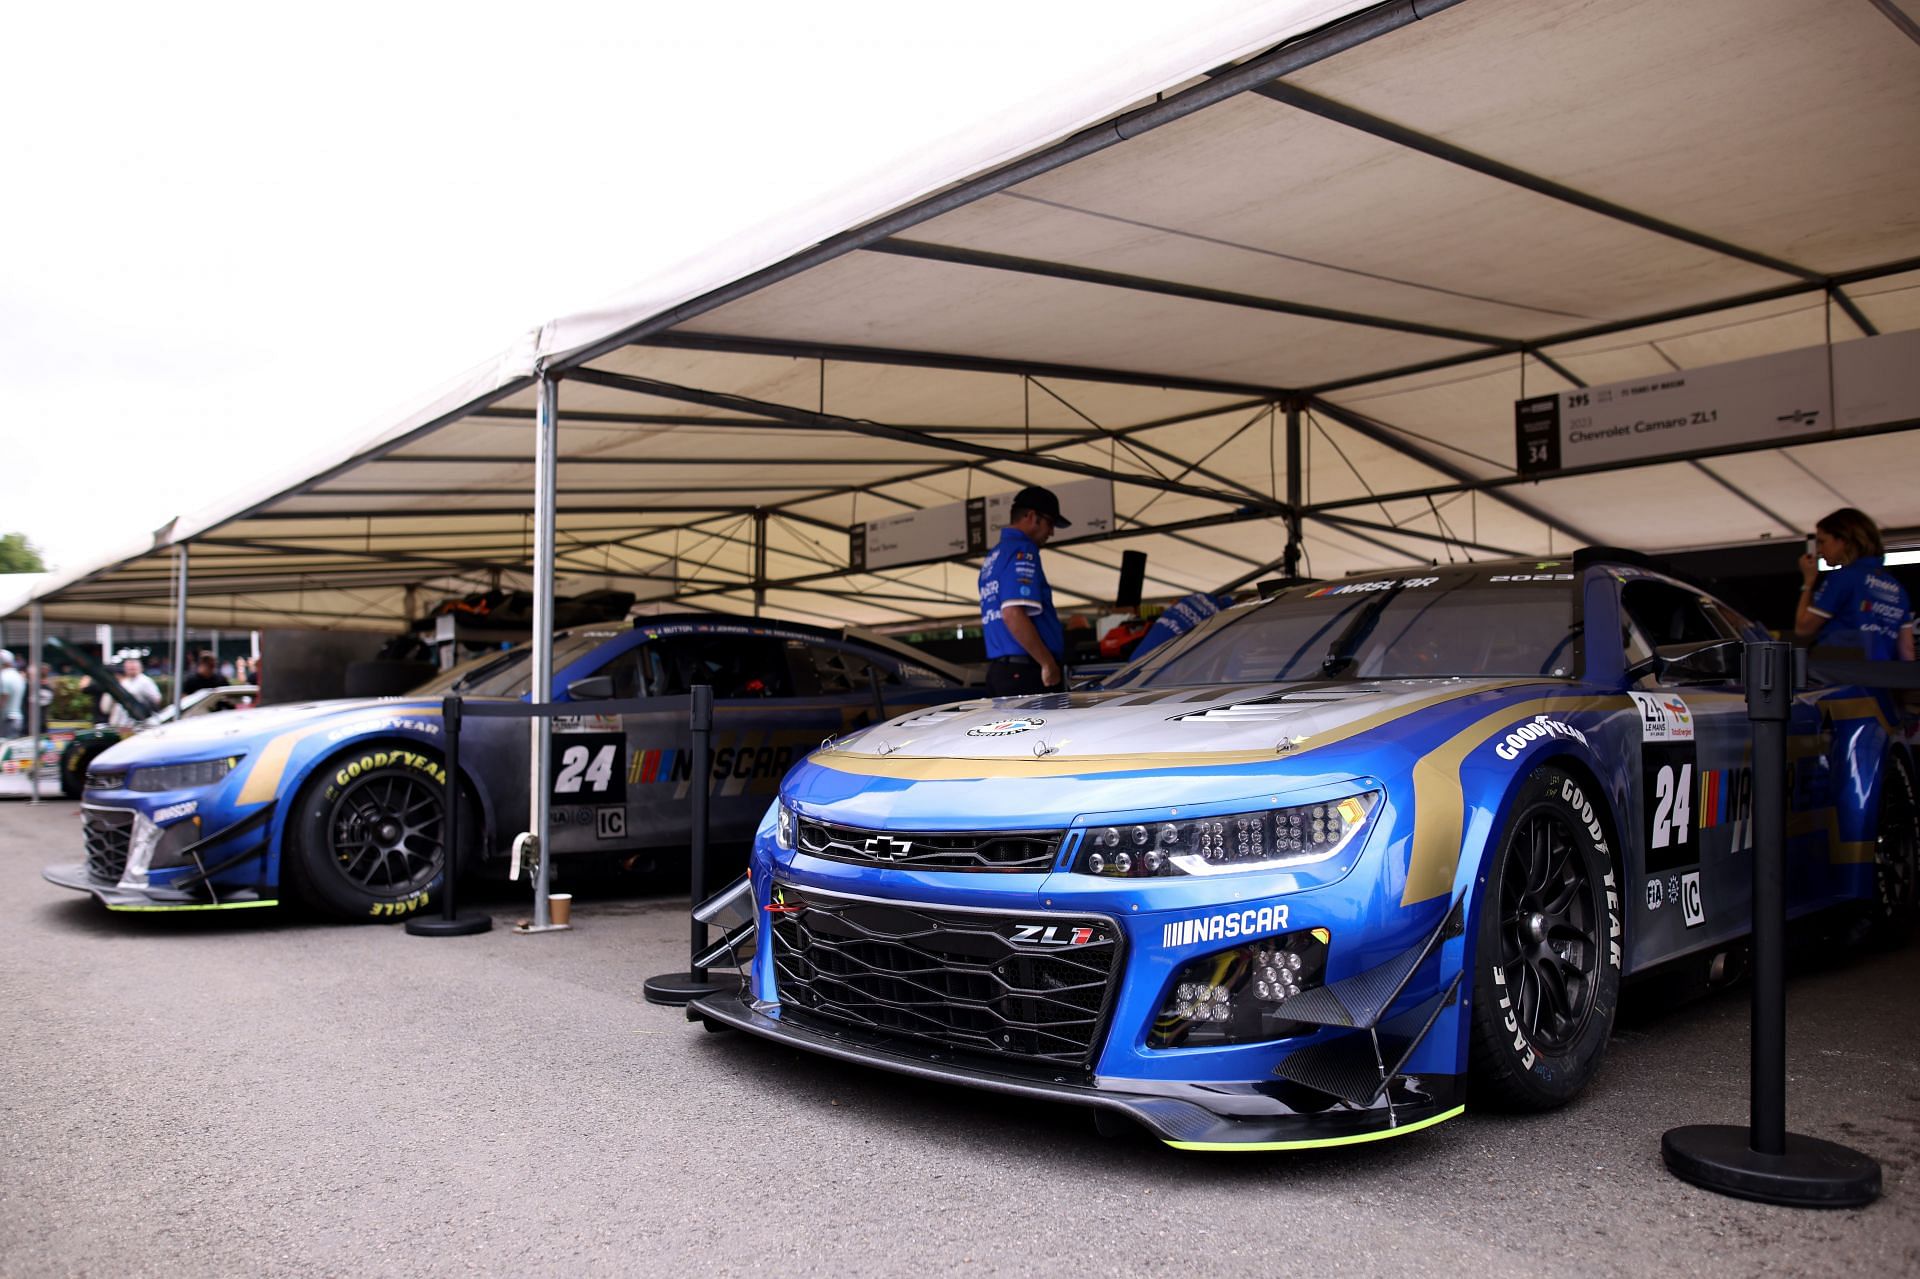 NASCAR Garage 56 at Goodwood Festival of Speed